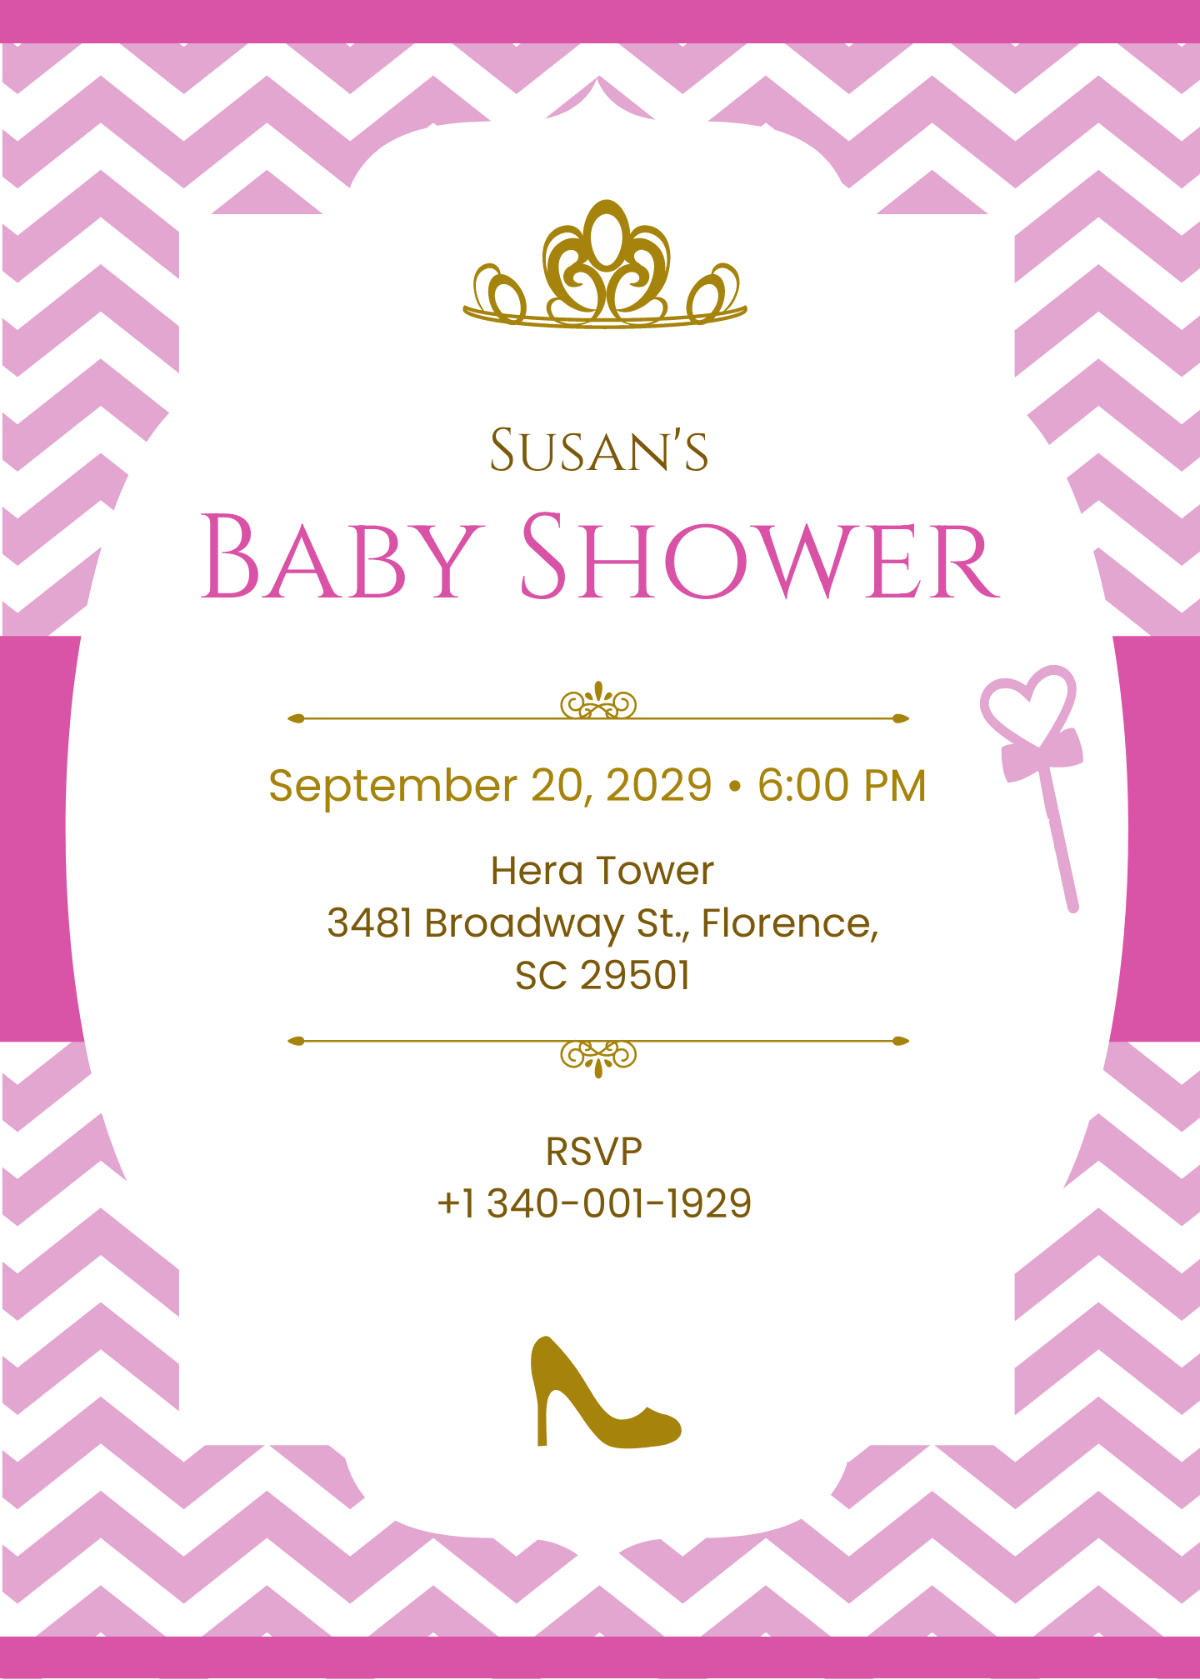 Chevron Princess Baby Shower Invitation Template